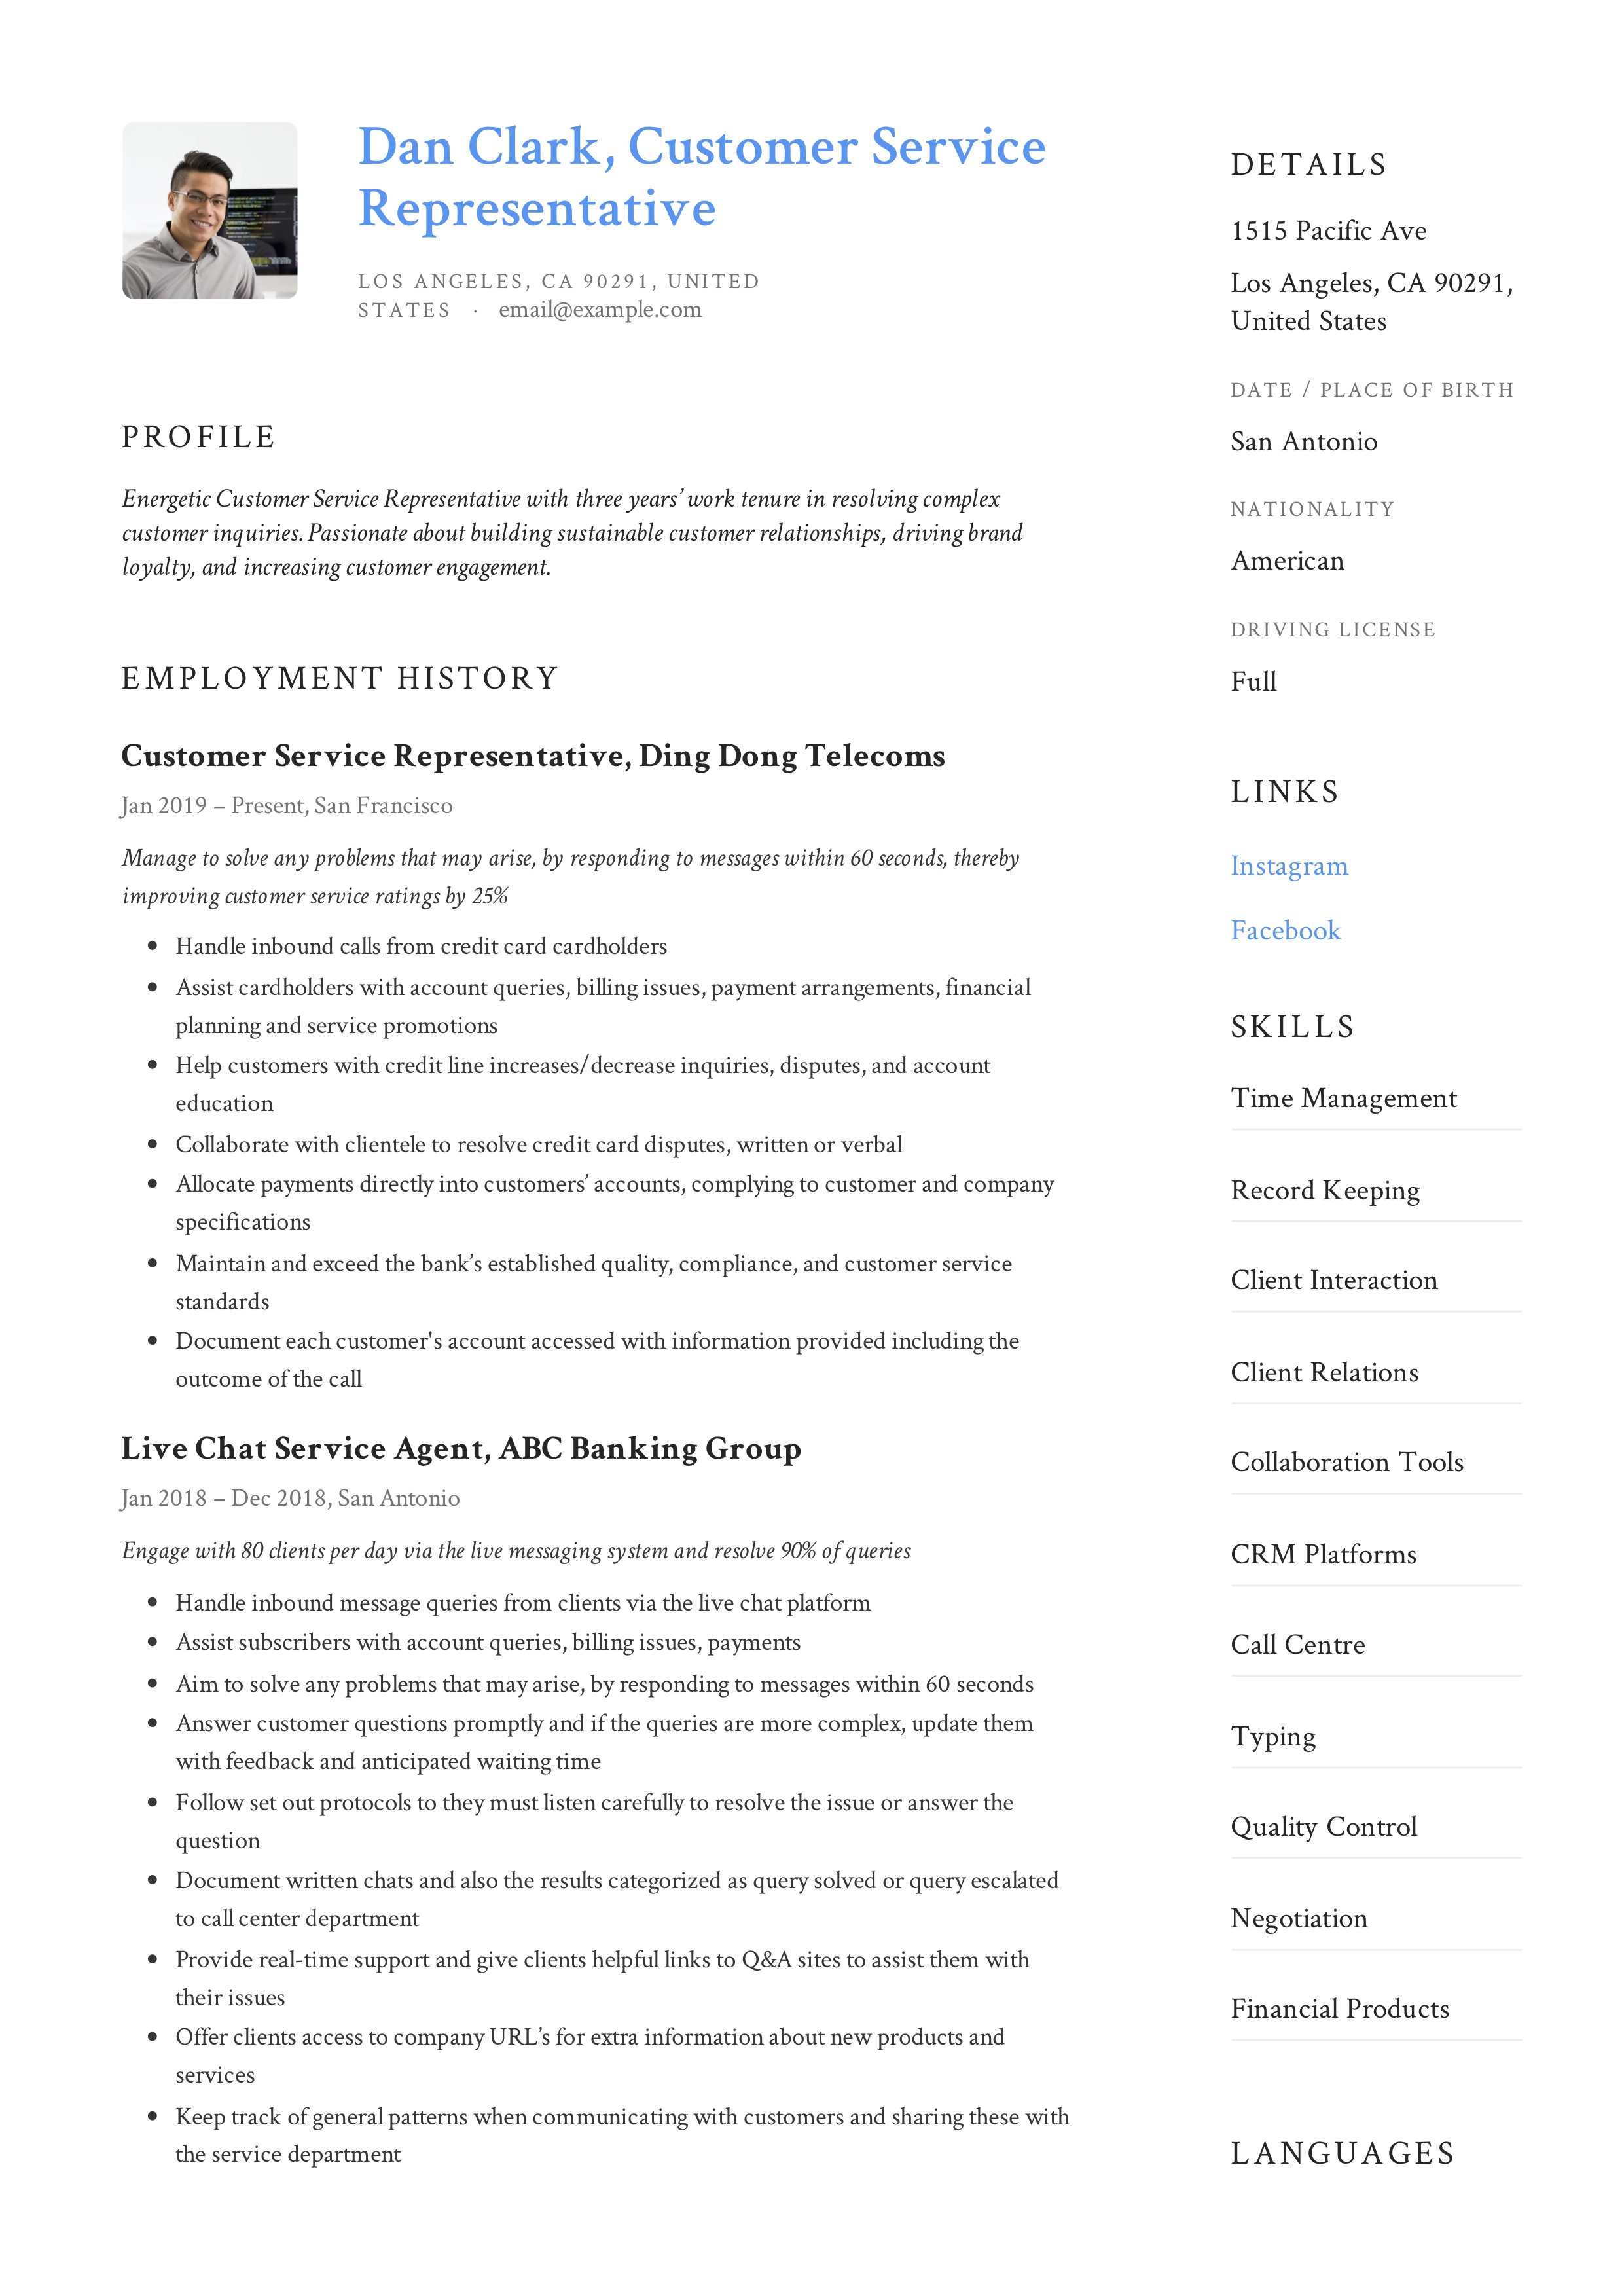 Resume For Customer Service Customer Service Representative Resume 5 resume for customer service|wikiresume.com